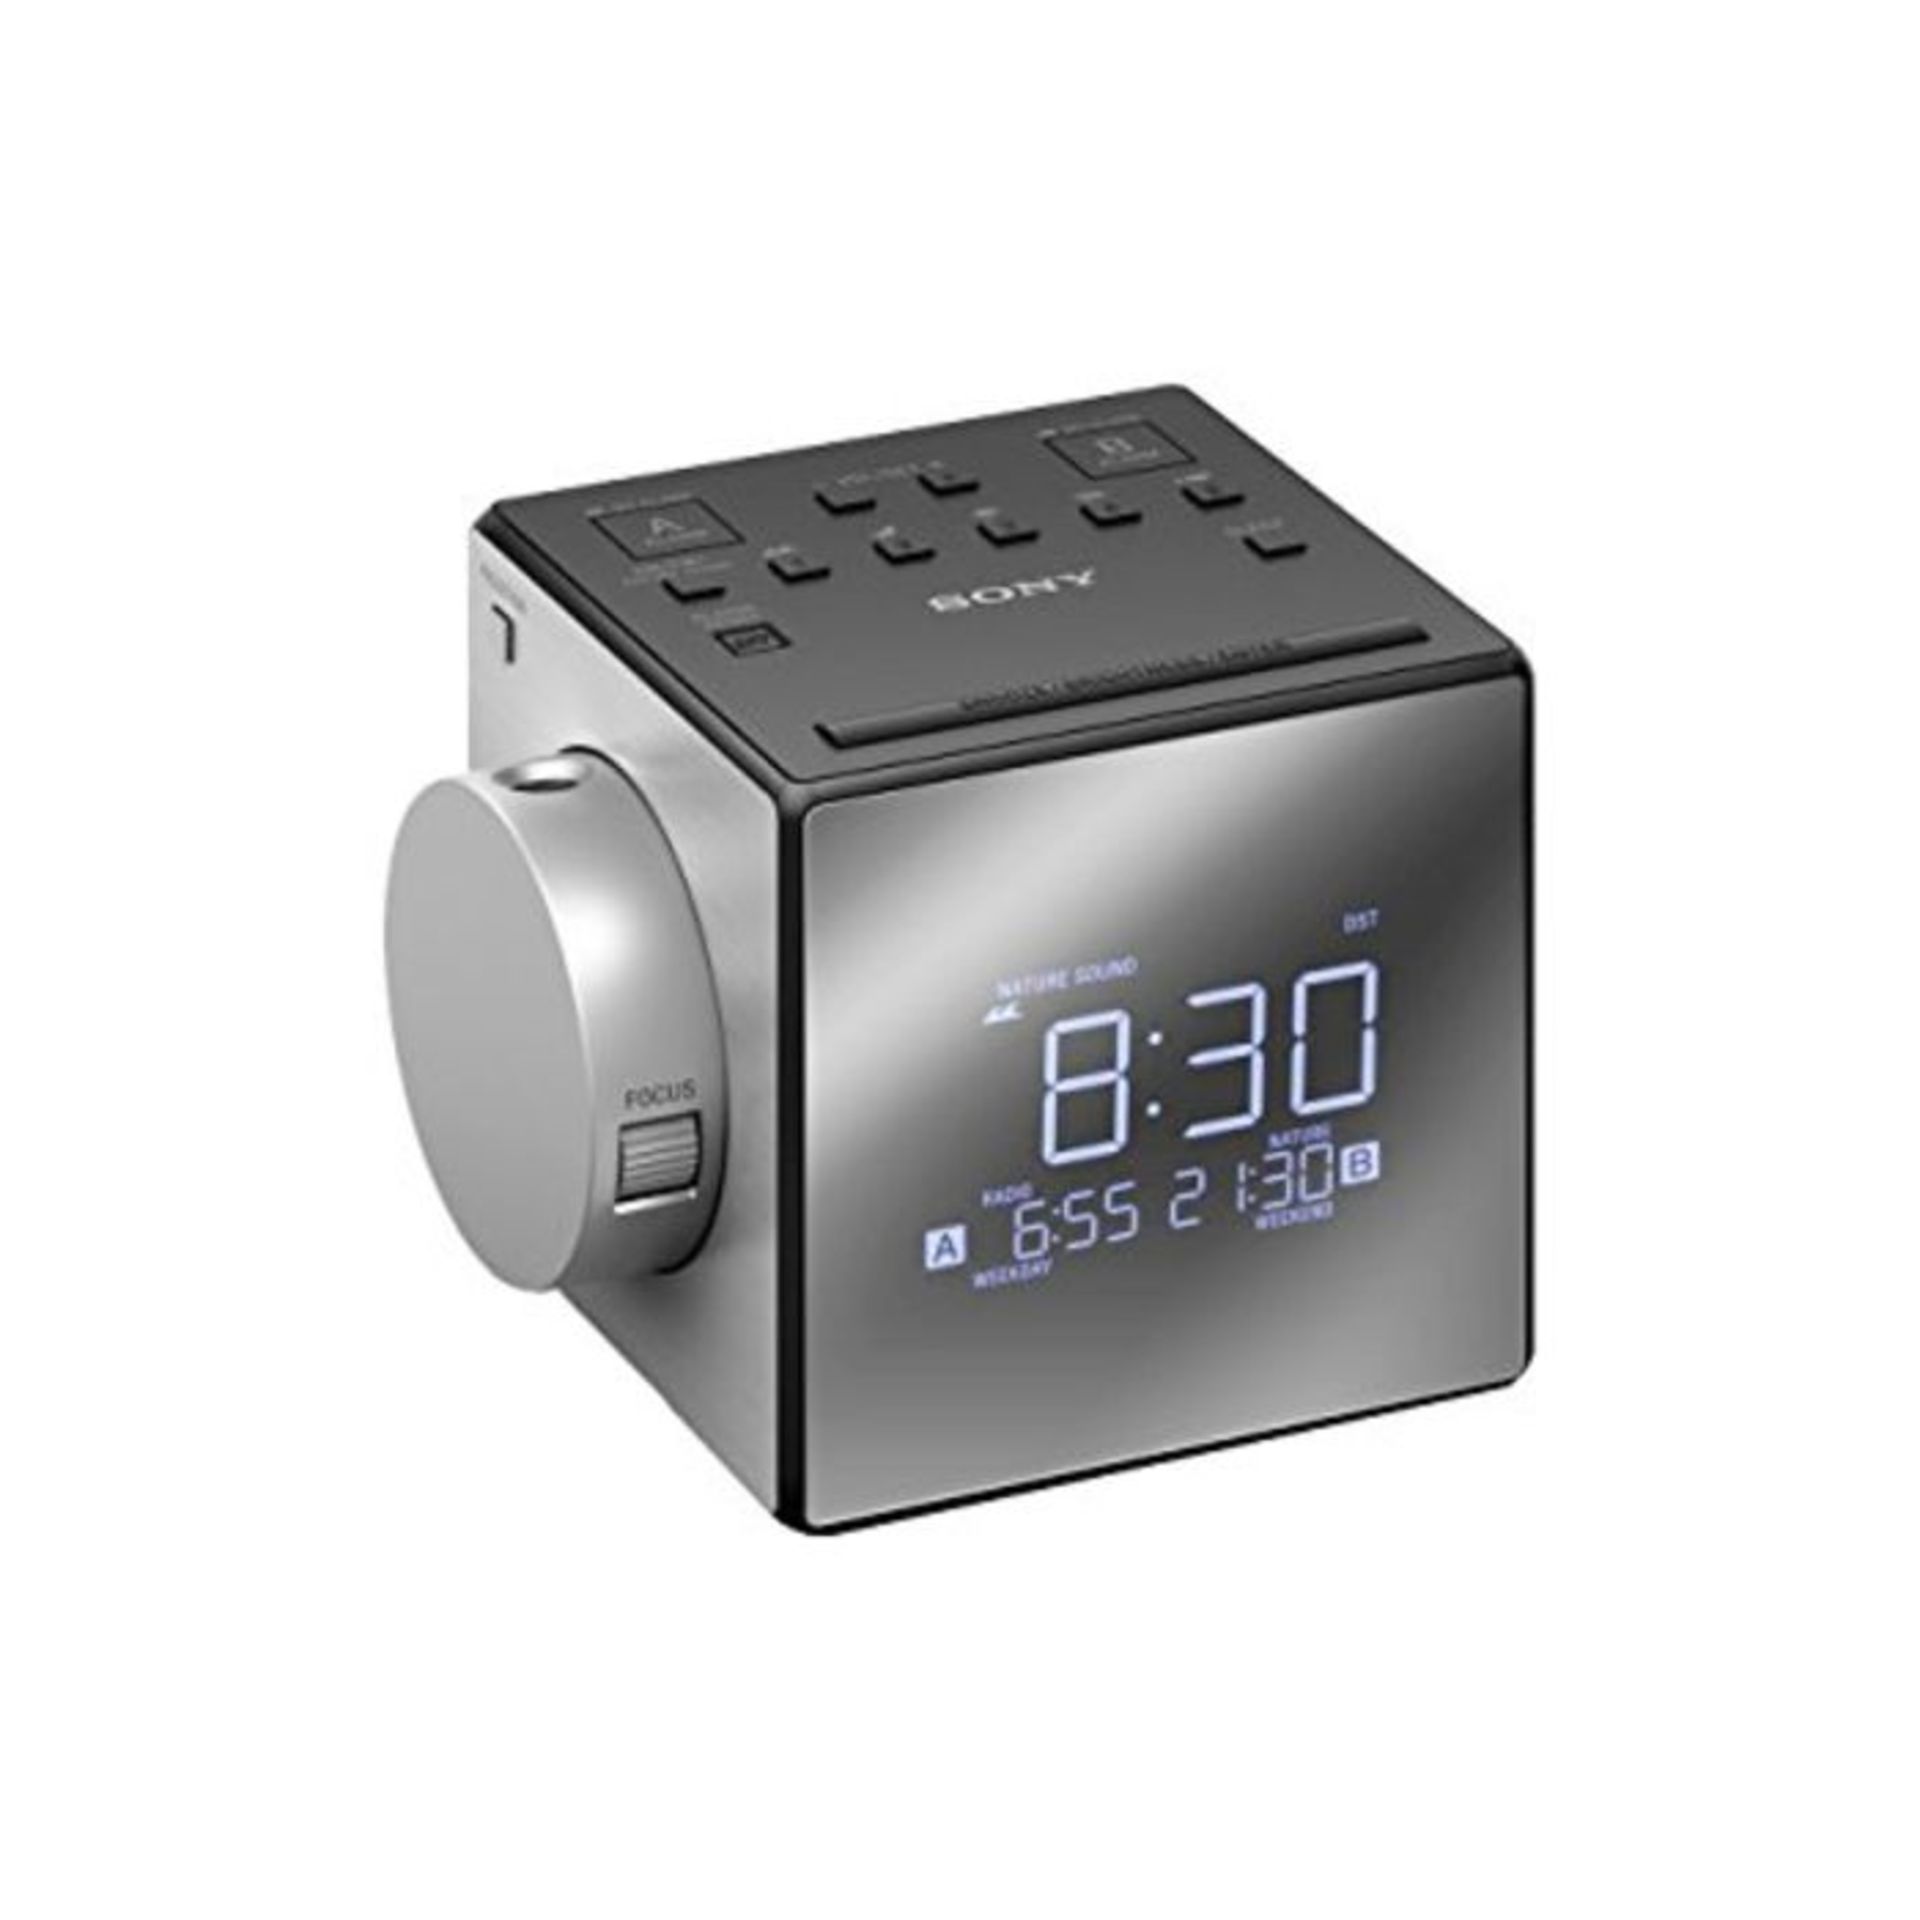 RRP £70.00 Sony ICF-C1T AM/FM Radio Alarm Clock with Date and LED Display Radio alarm clock metal